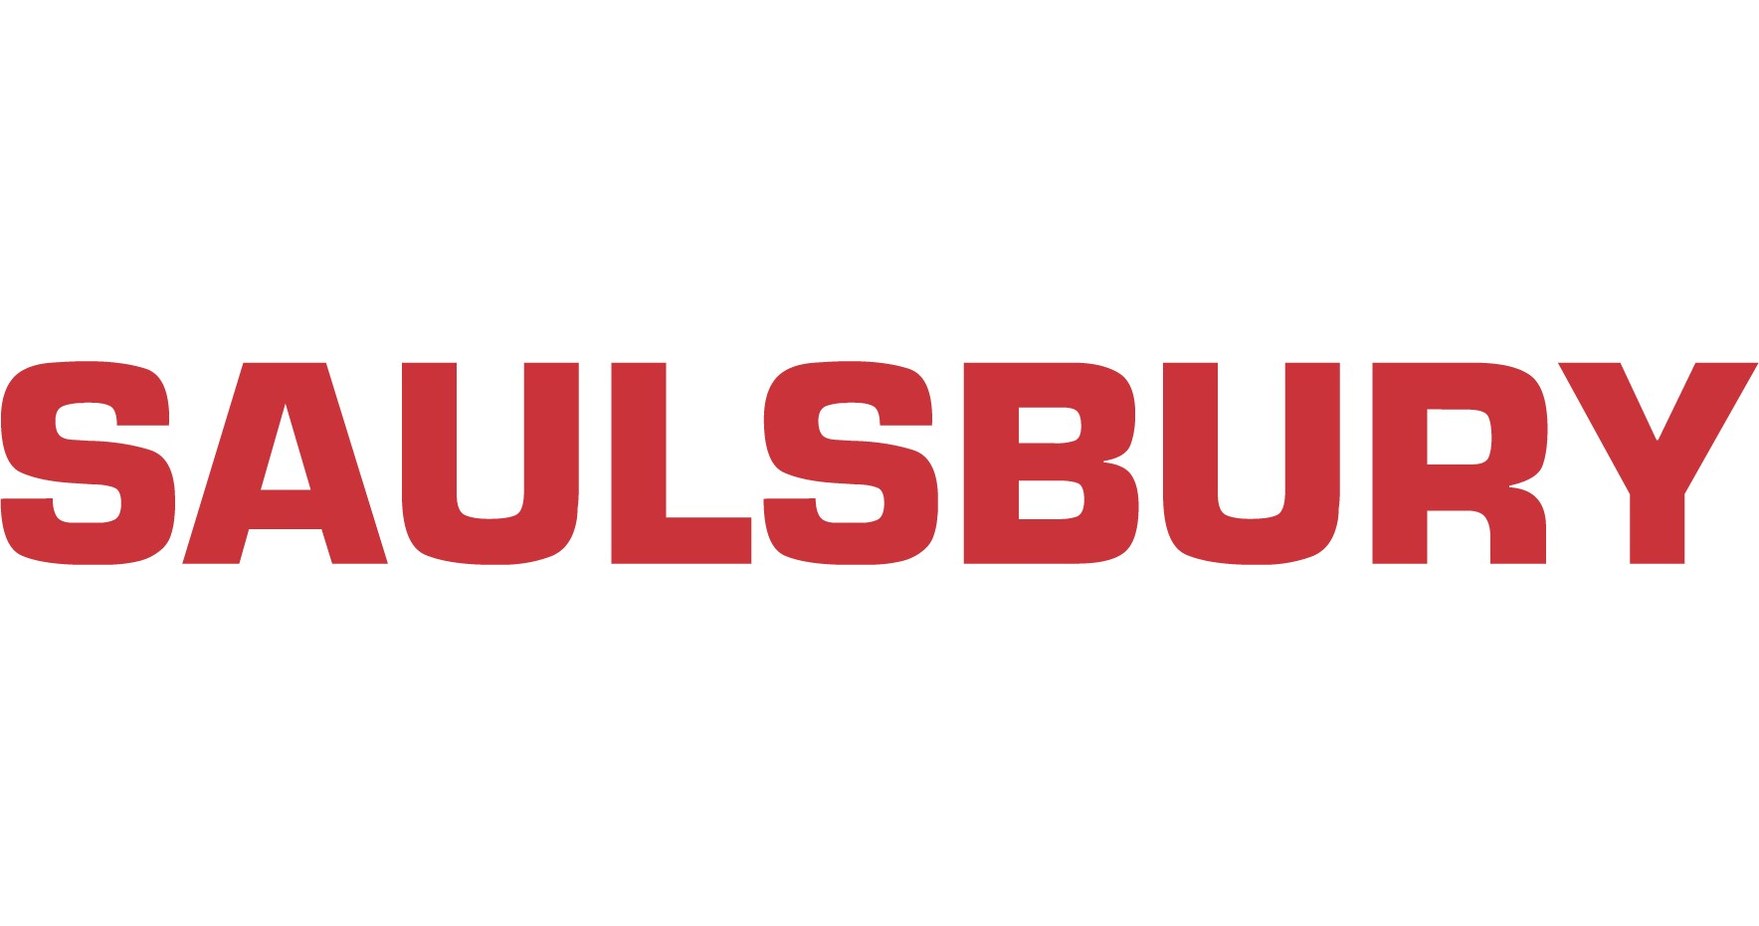 Saulsbury Industries Logo jpg?p=facebook.